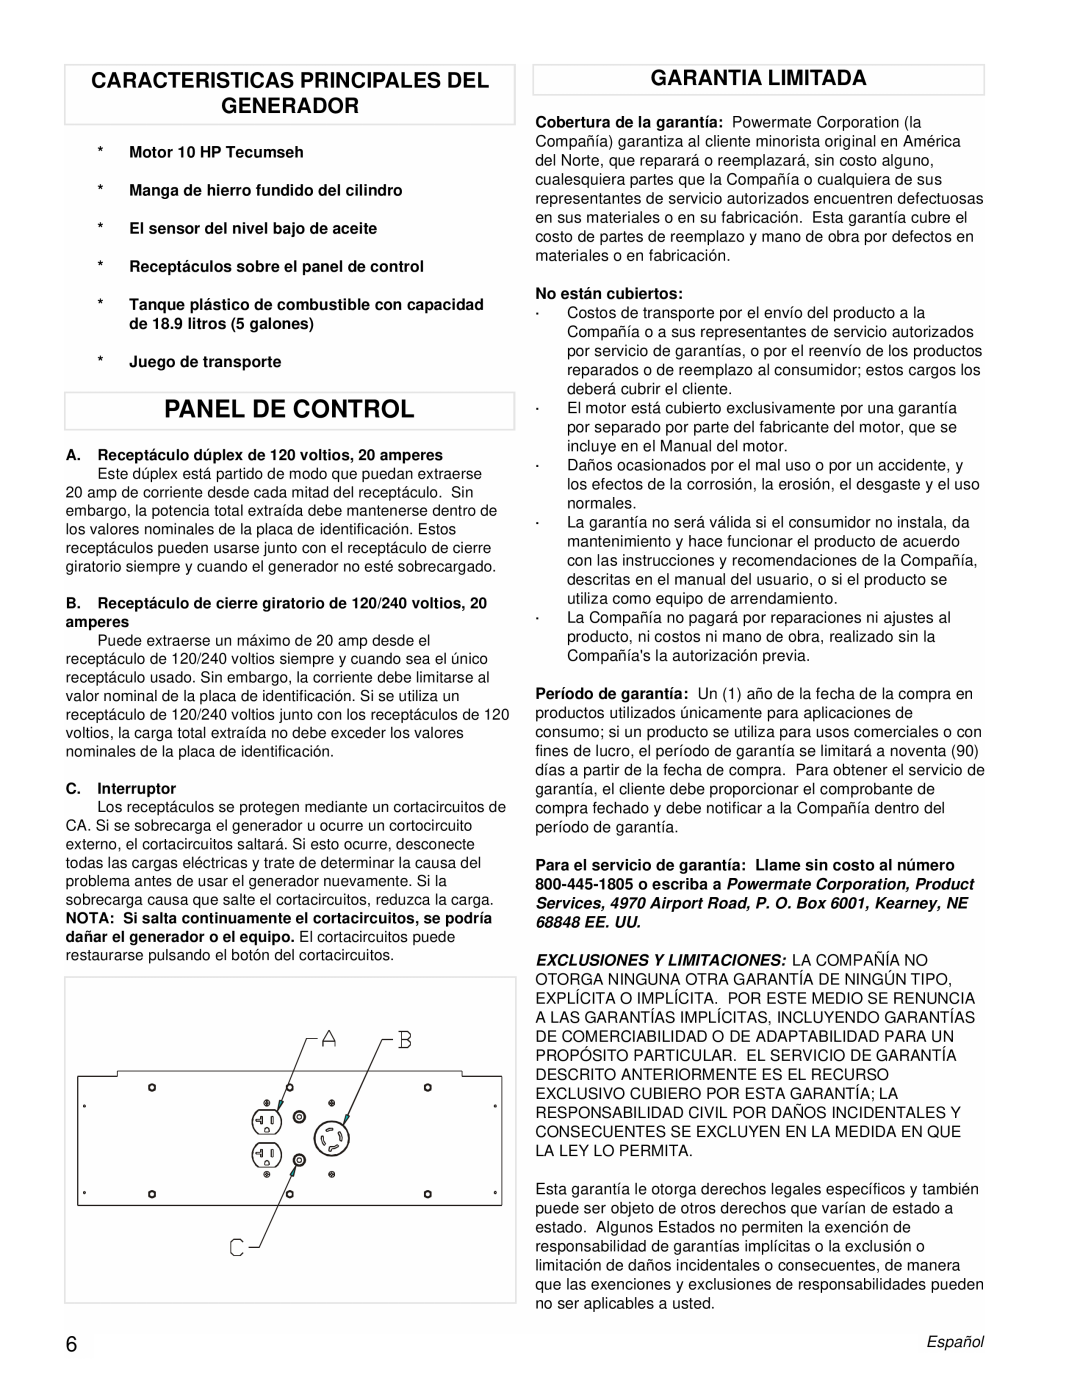 Powermate PM0525303s manual Panel De Control, Caracteristicas Principales Del Generador, Garantia Limitada 